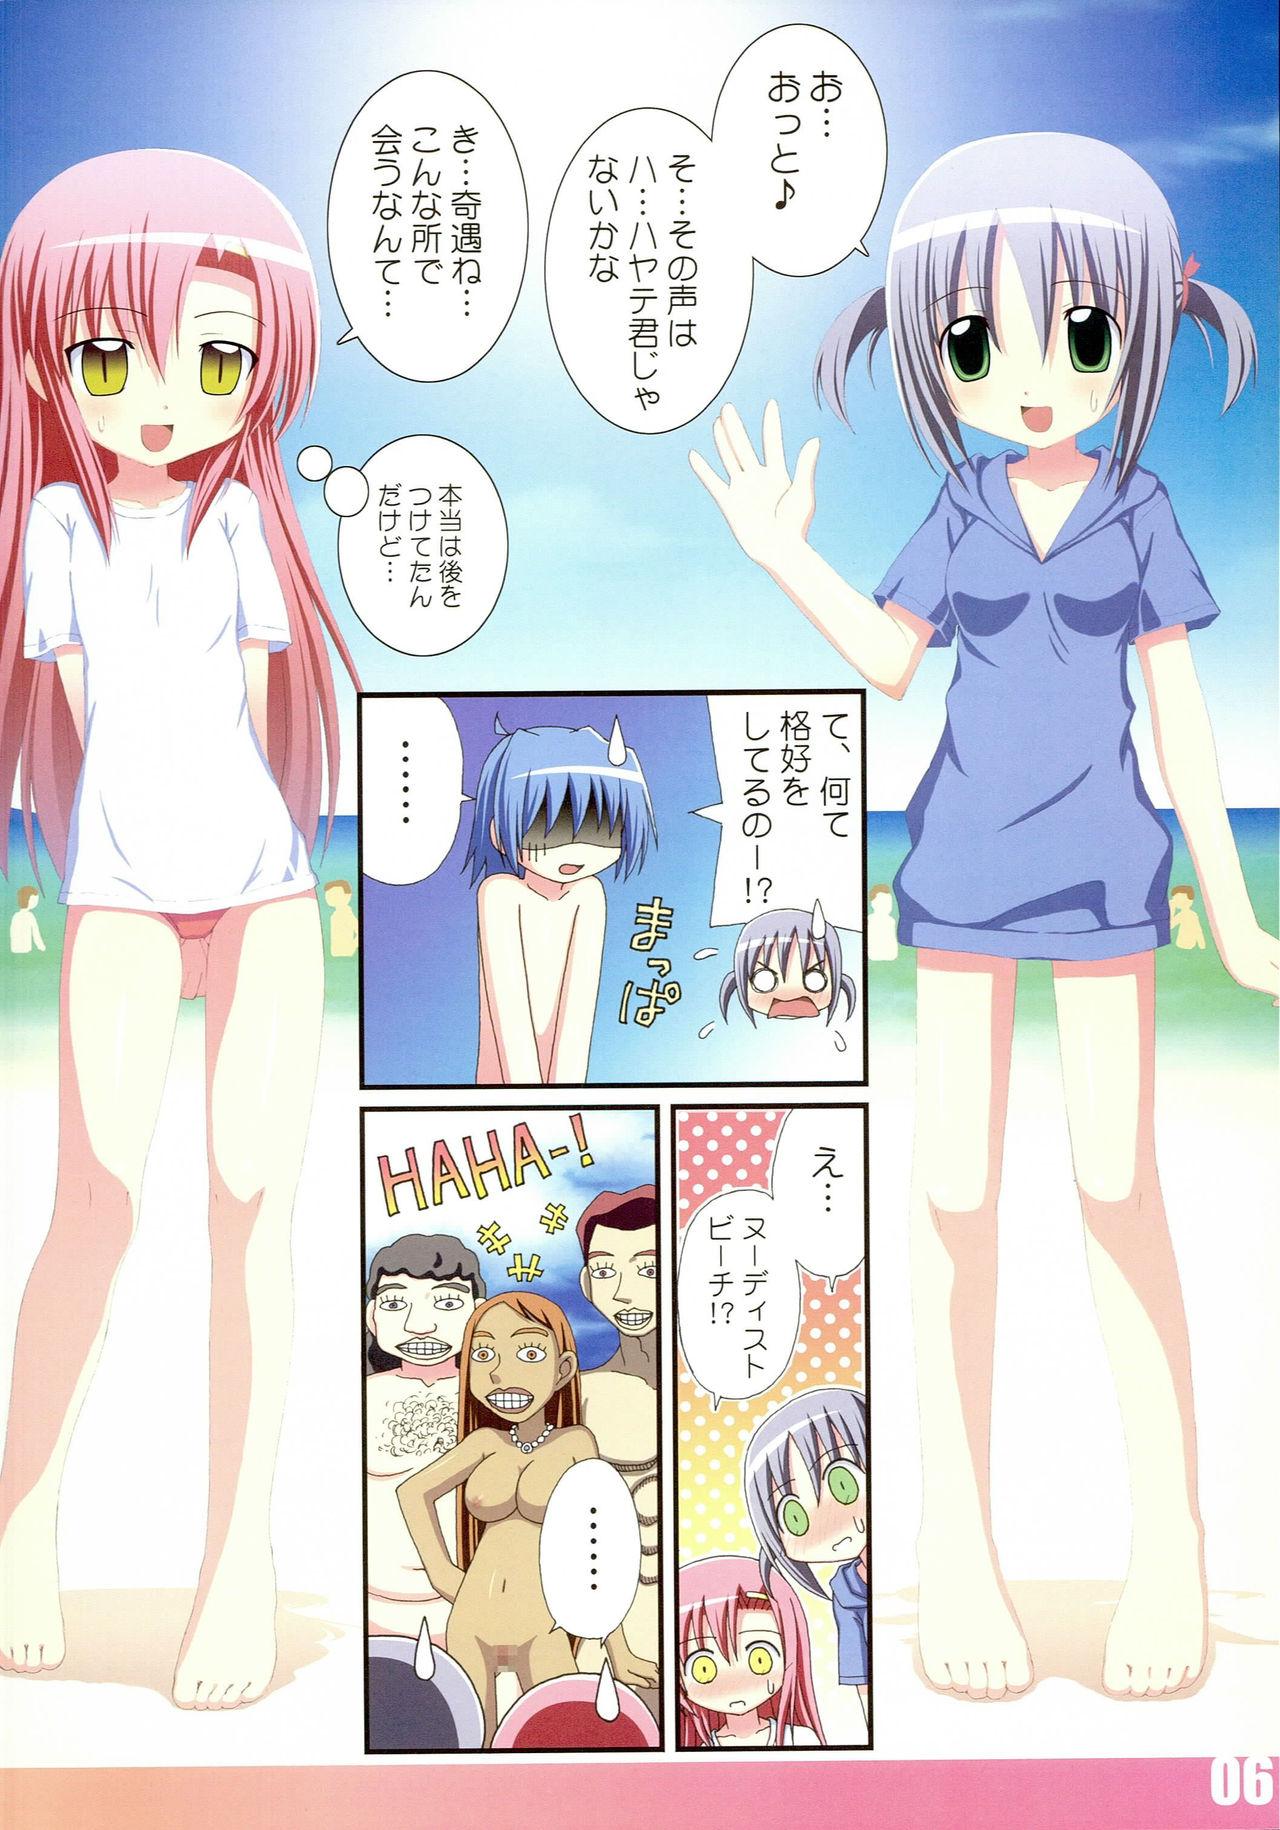 Family FESTA 2 - Hayate no gotoku Soapy - Page 5